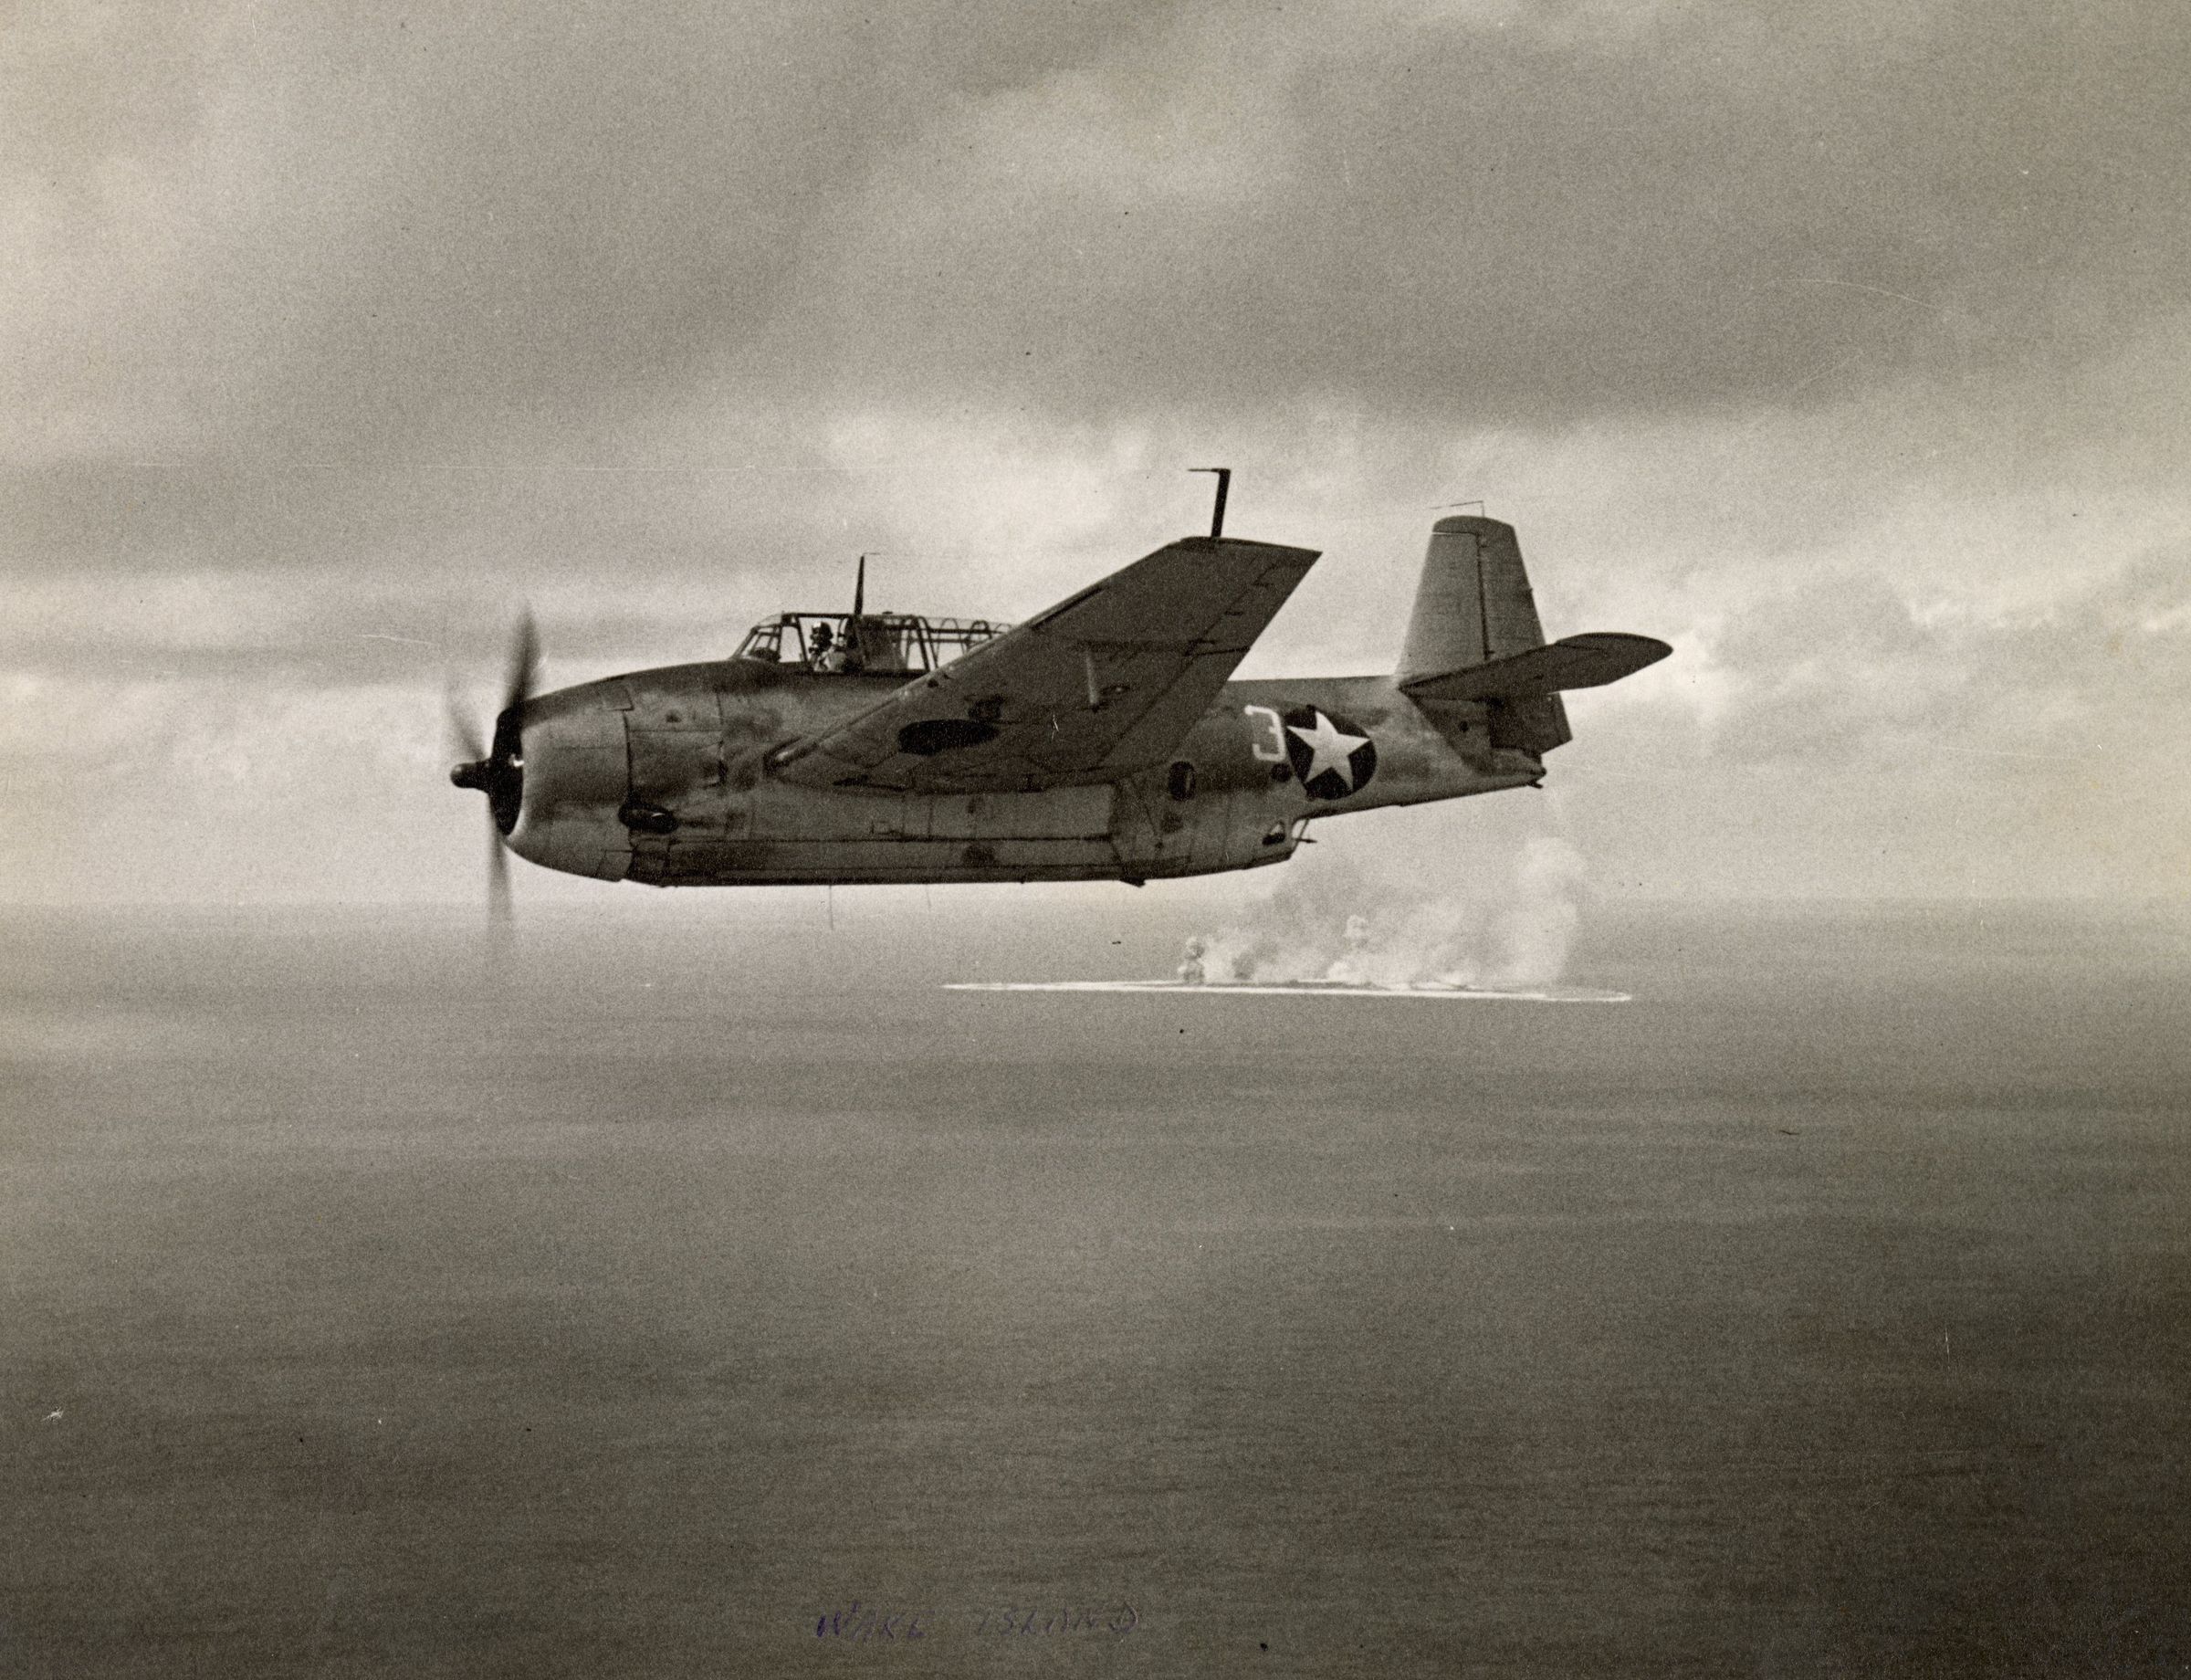 Primary Image of Joseph Kristufek Flying His Avenger Torpedo Plane Past Wake Island